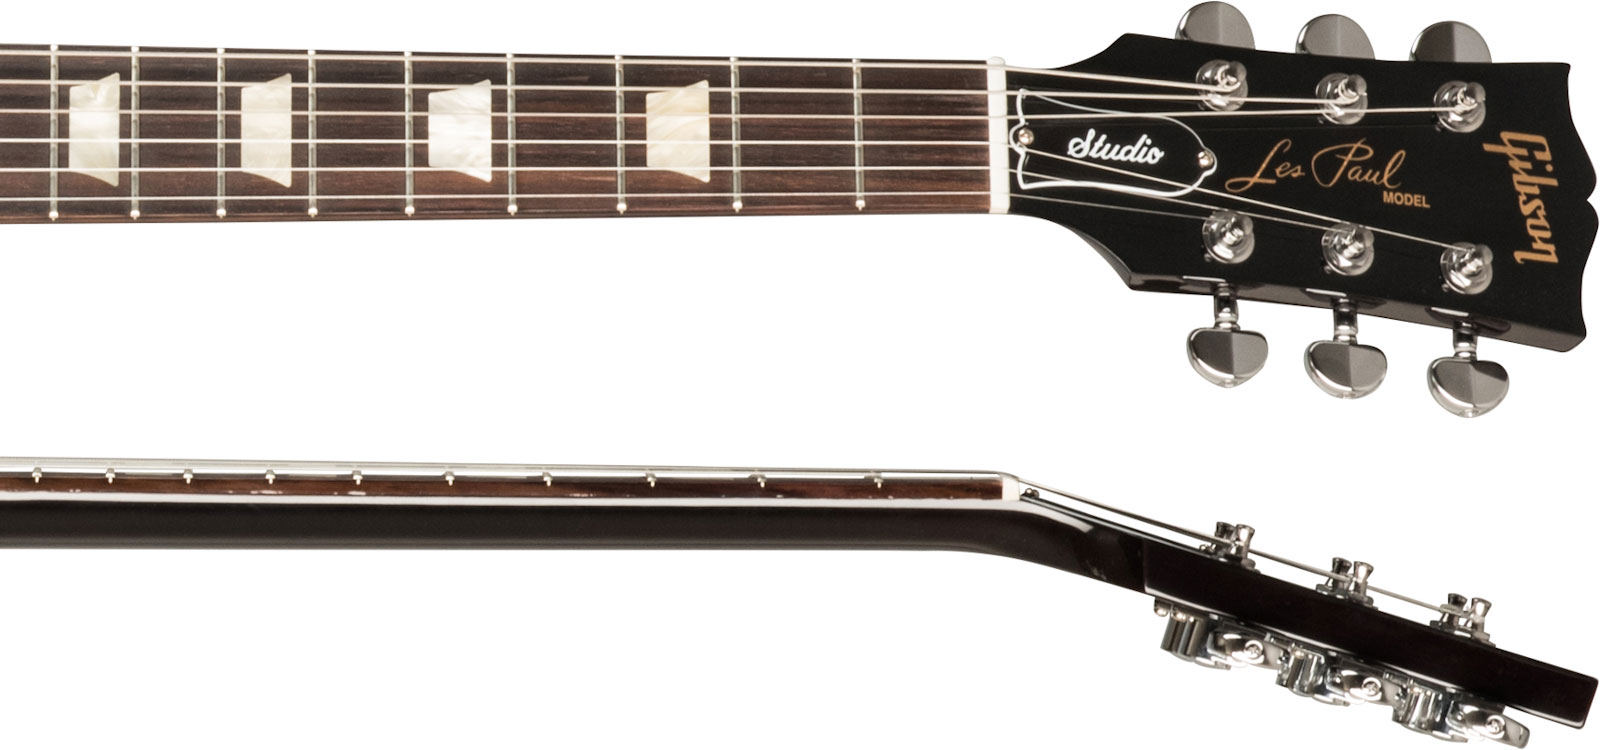 Gibson Les Paul Studio Modern 2h Ht Rw - Smokehouse Burst - Enkel gesneden elektrische gitaar - Variation 3